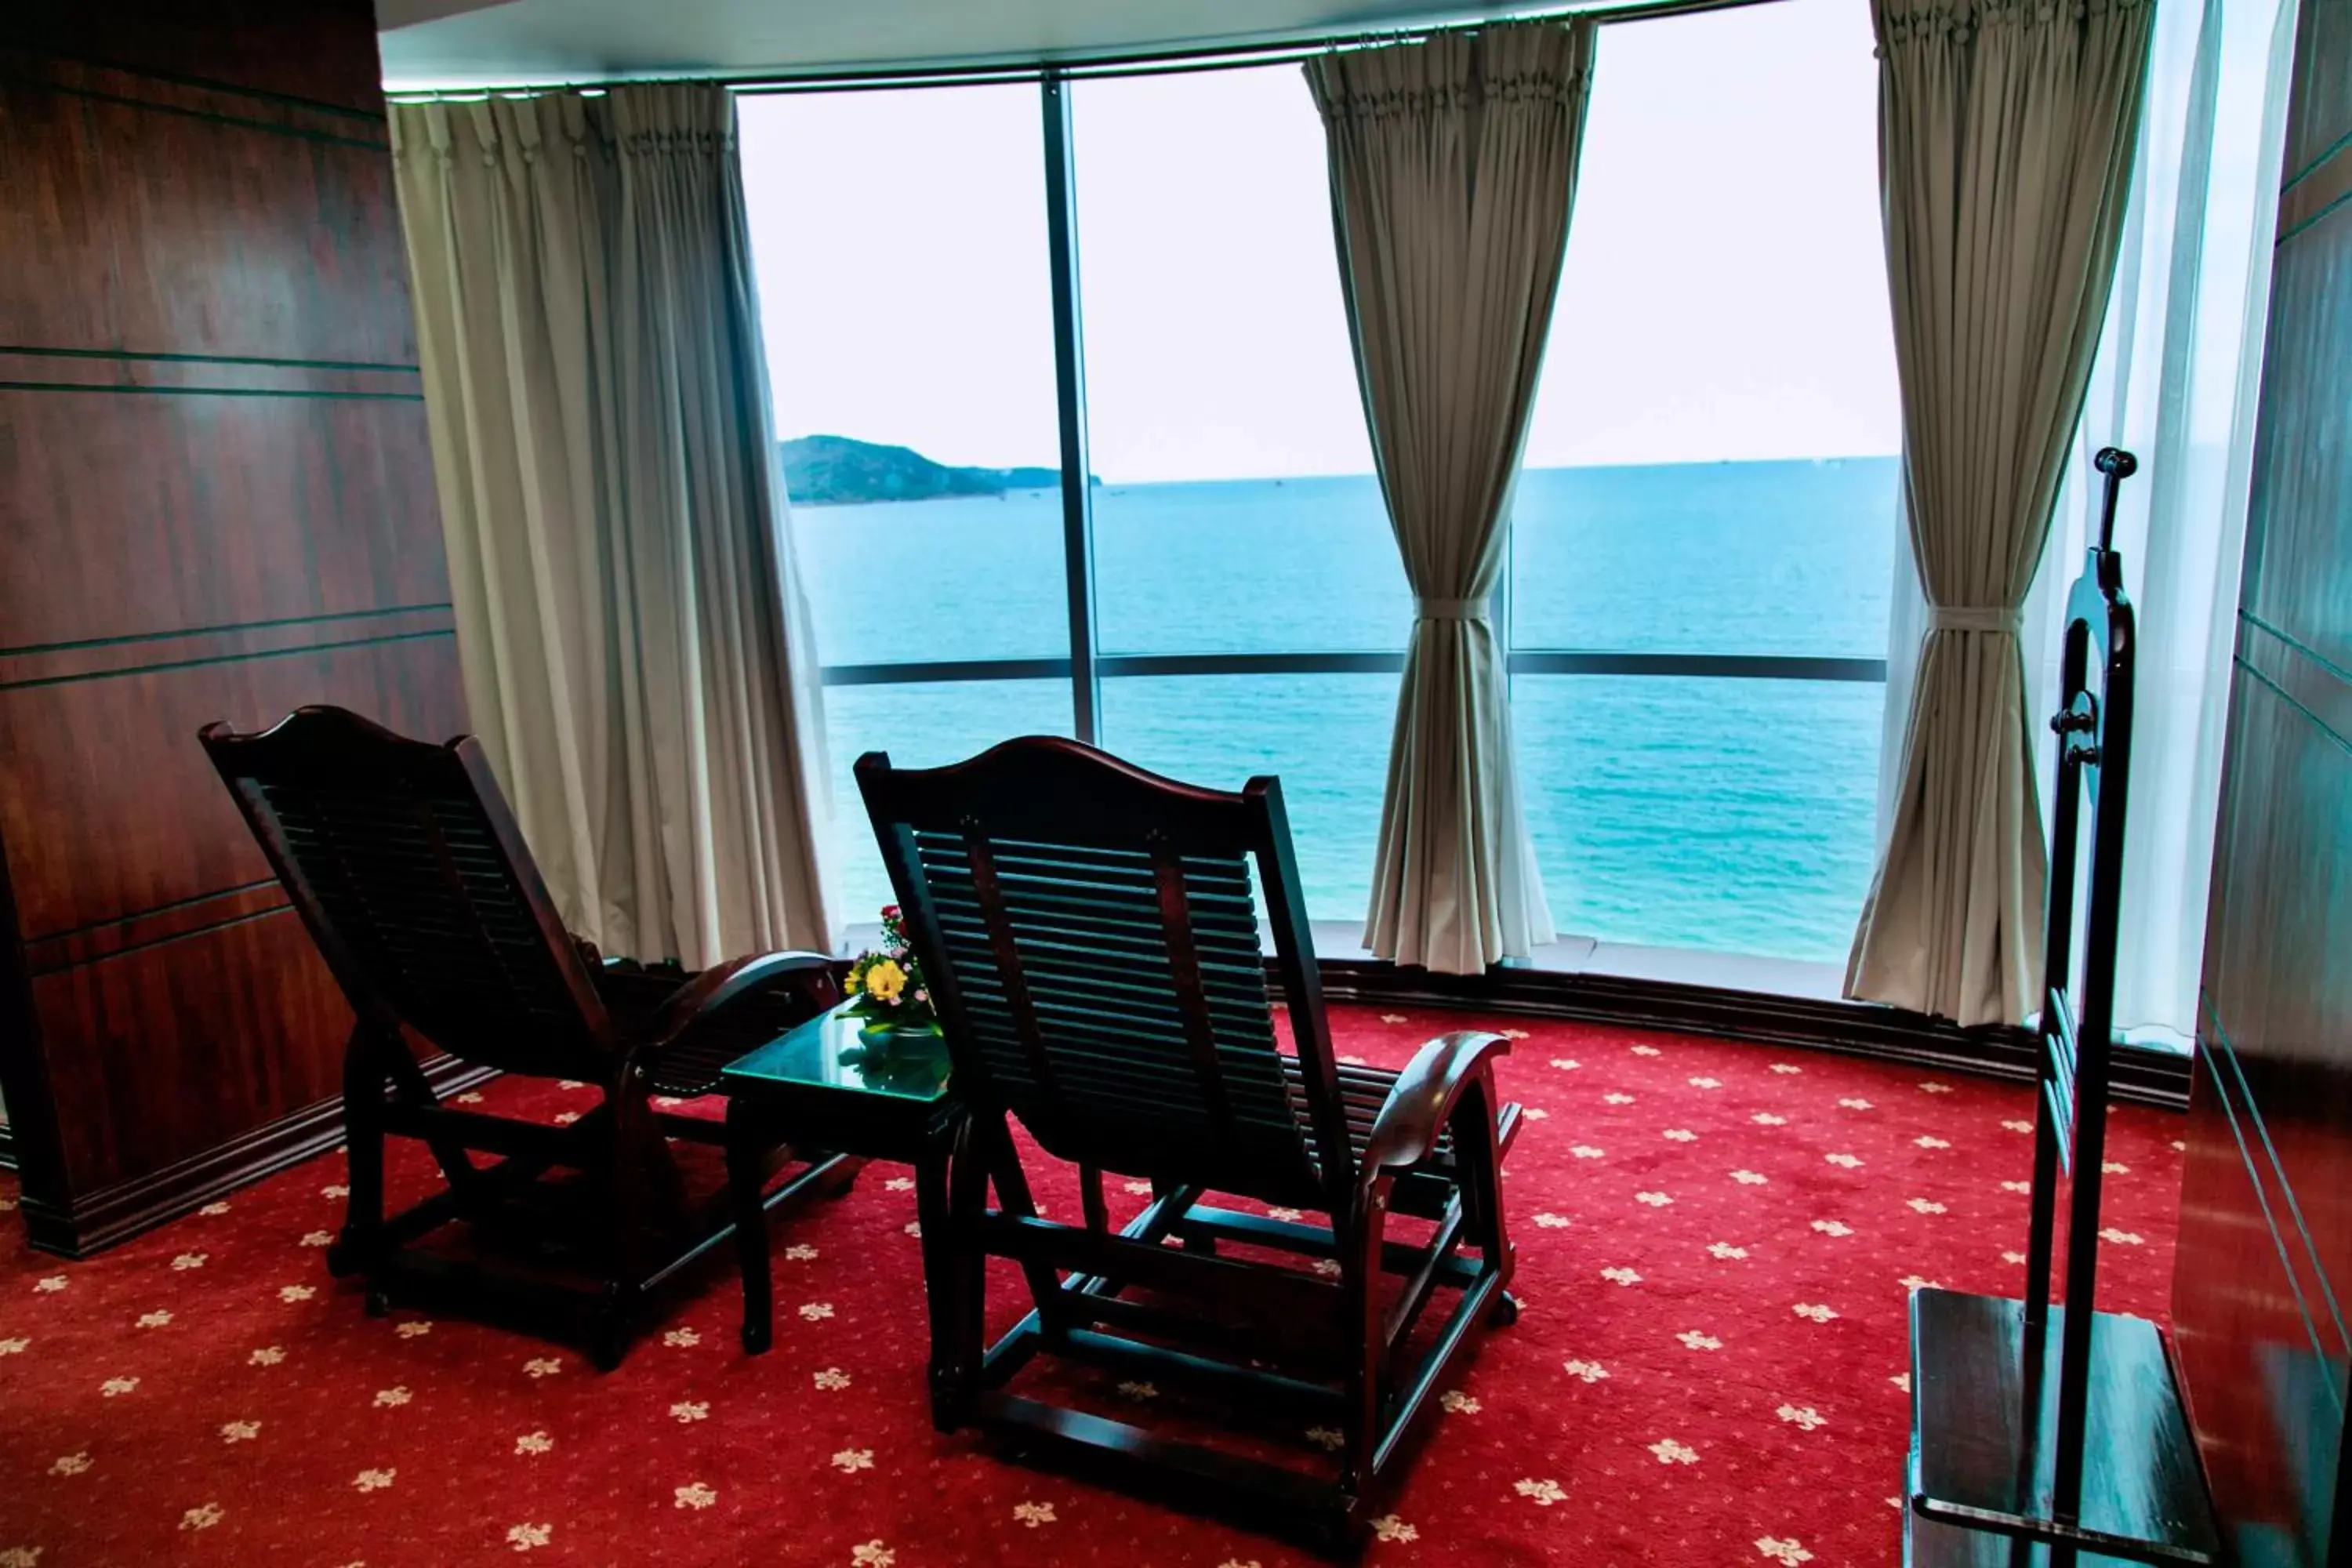 Sea View in Seagull Hotel